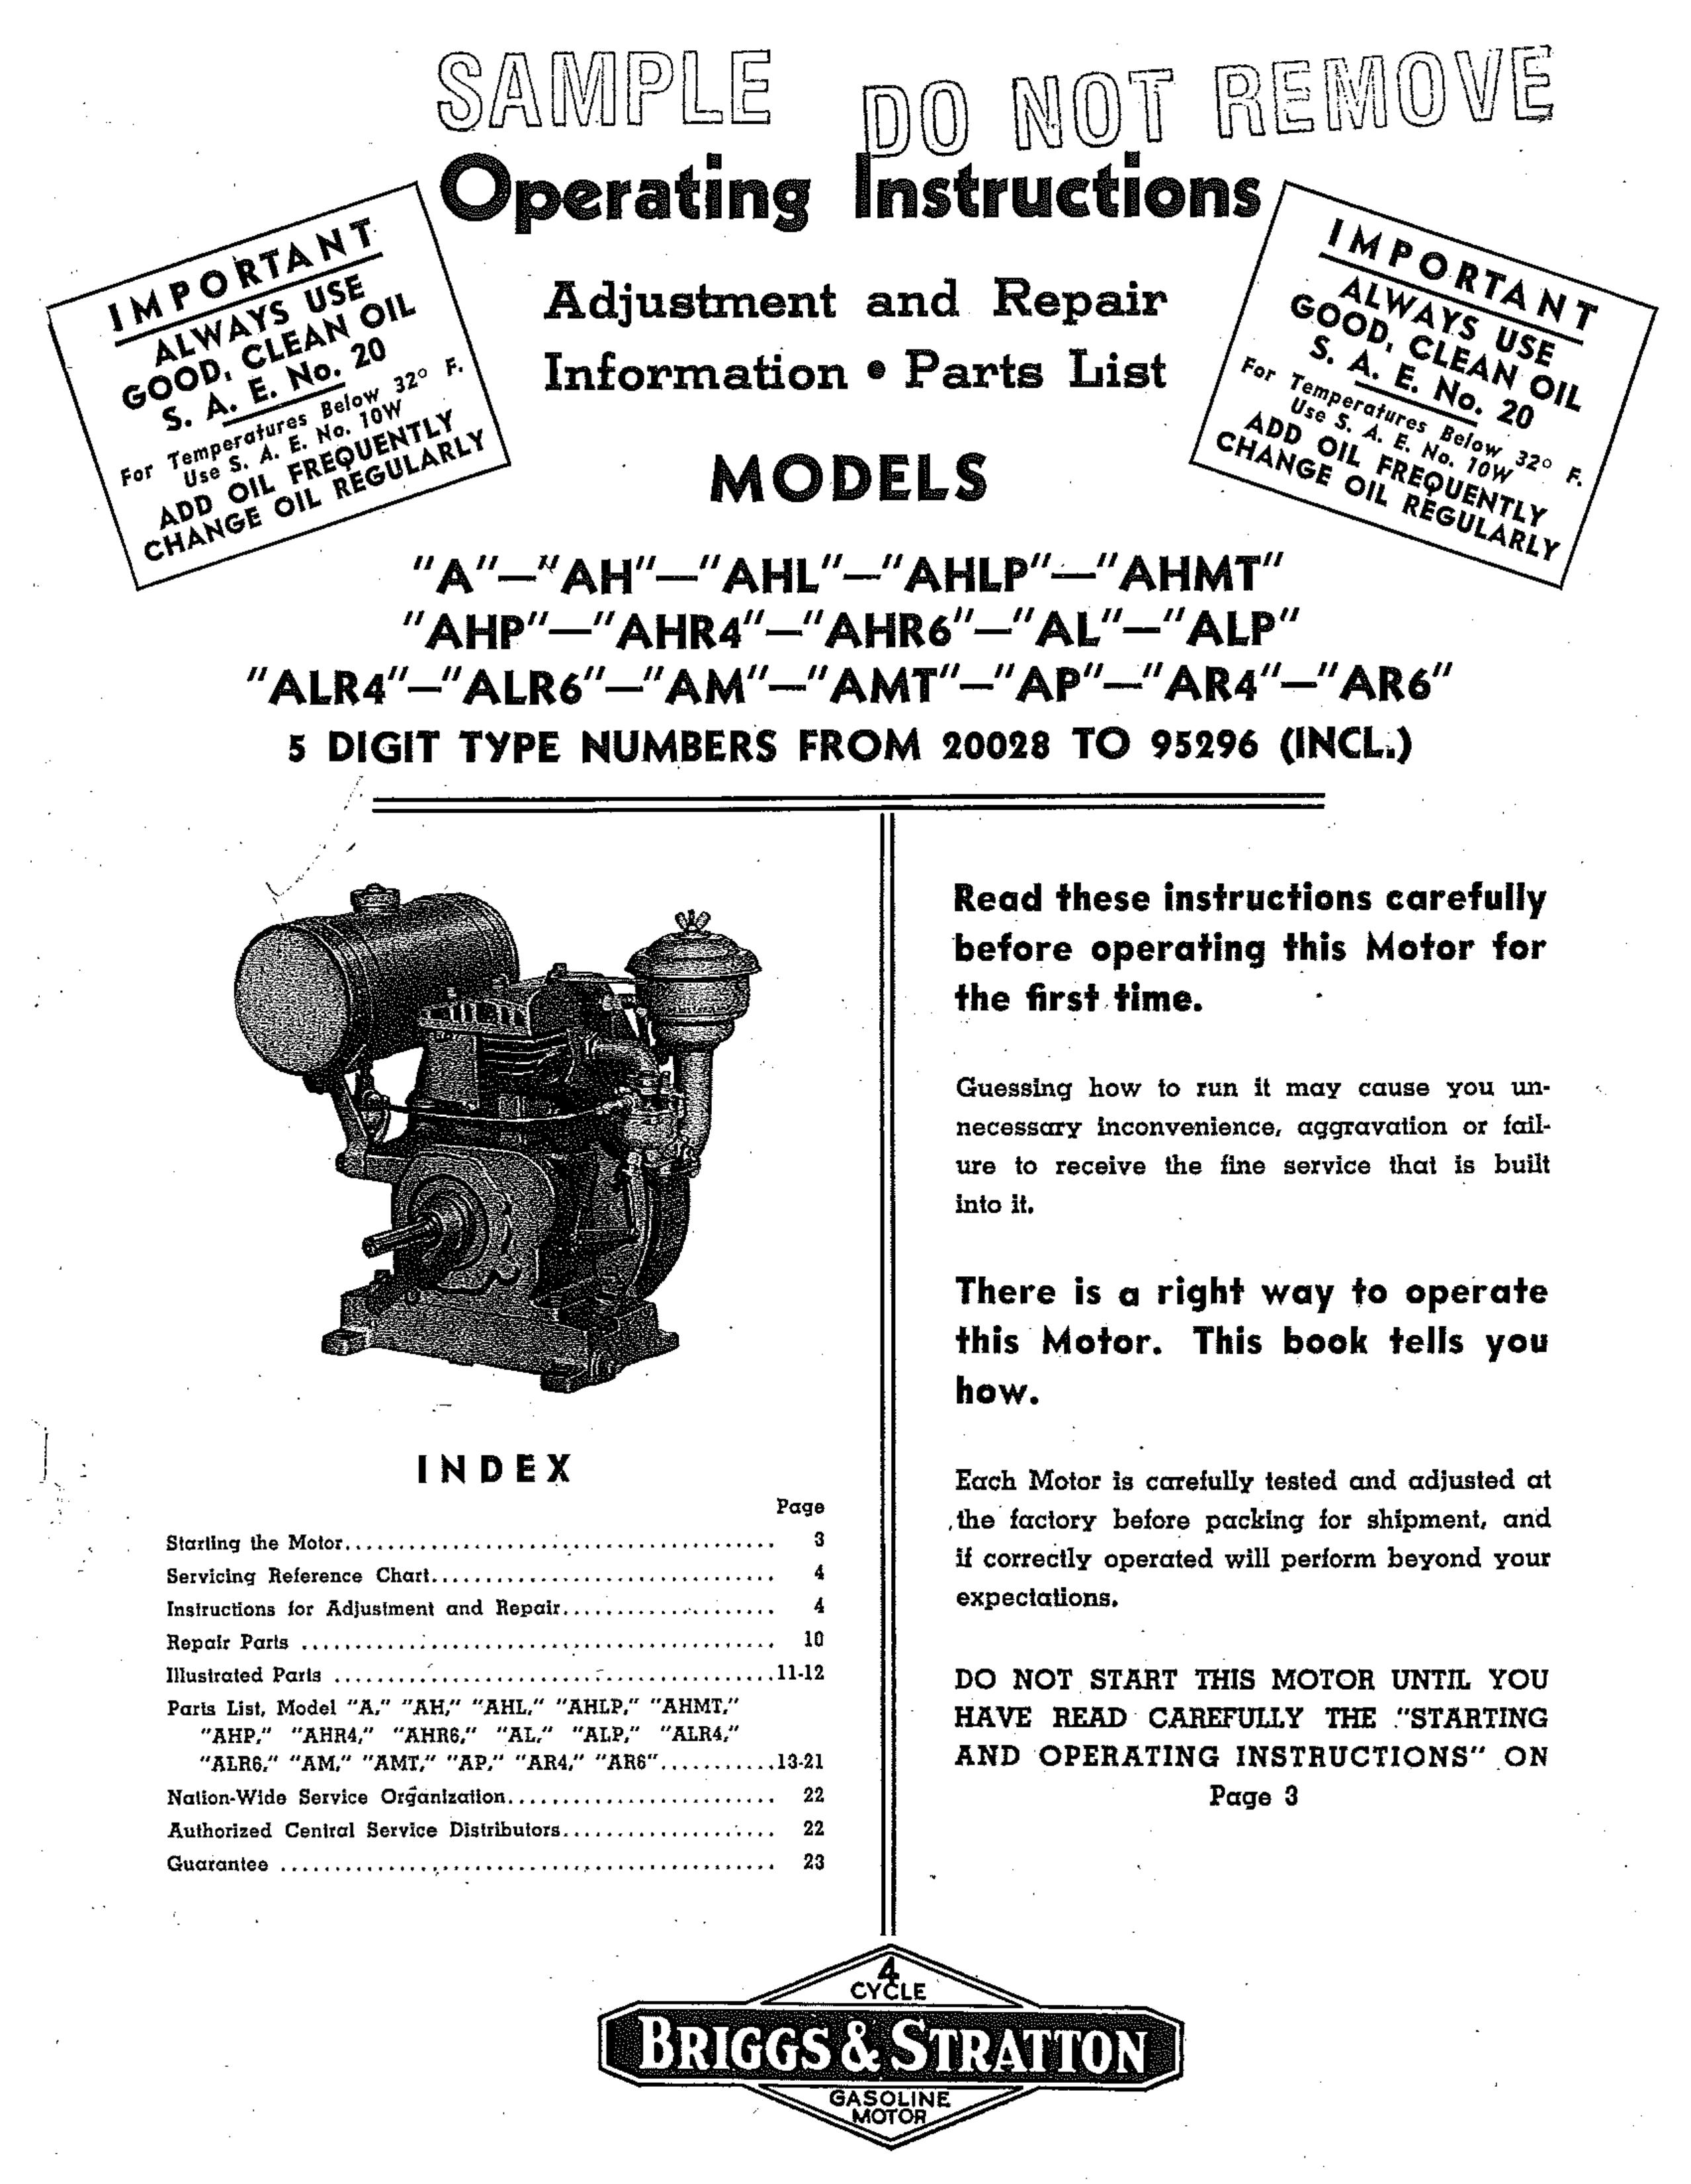 Briggs & Stratton AHL Outboard Motor User Manual